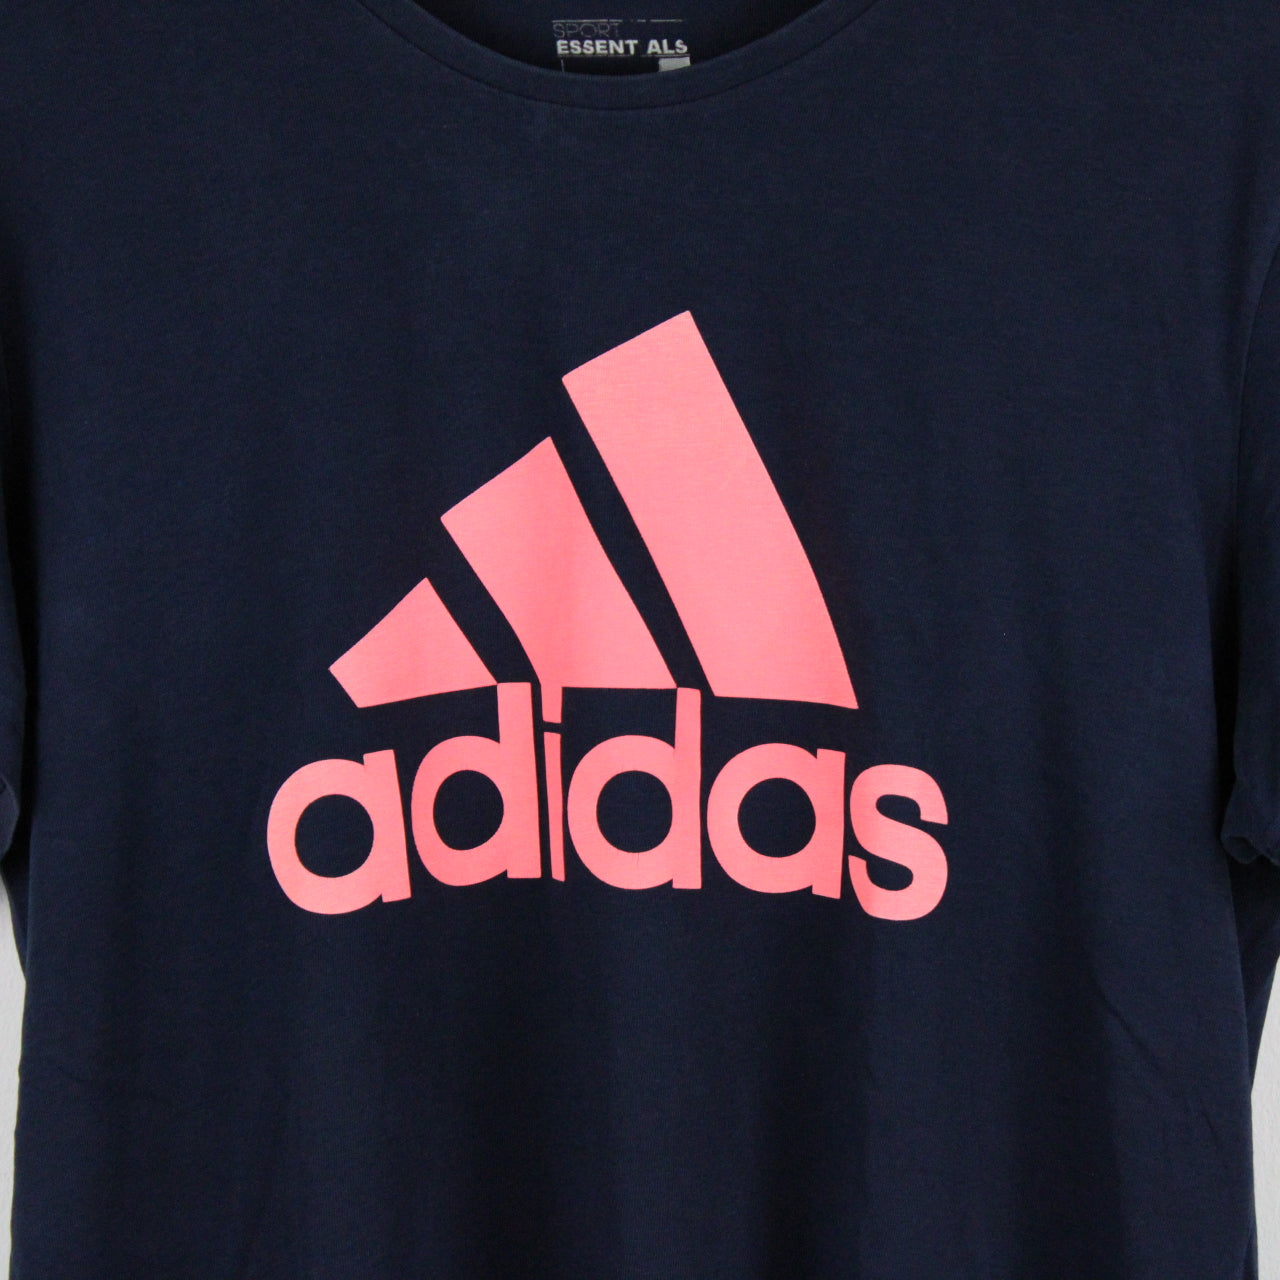 ADIDAS T-Shirt | Navy Blue | Large